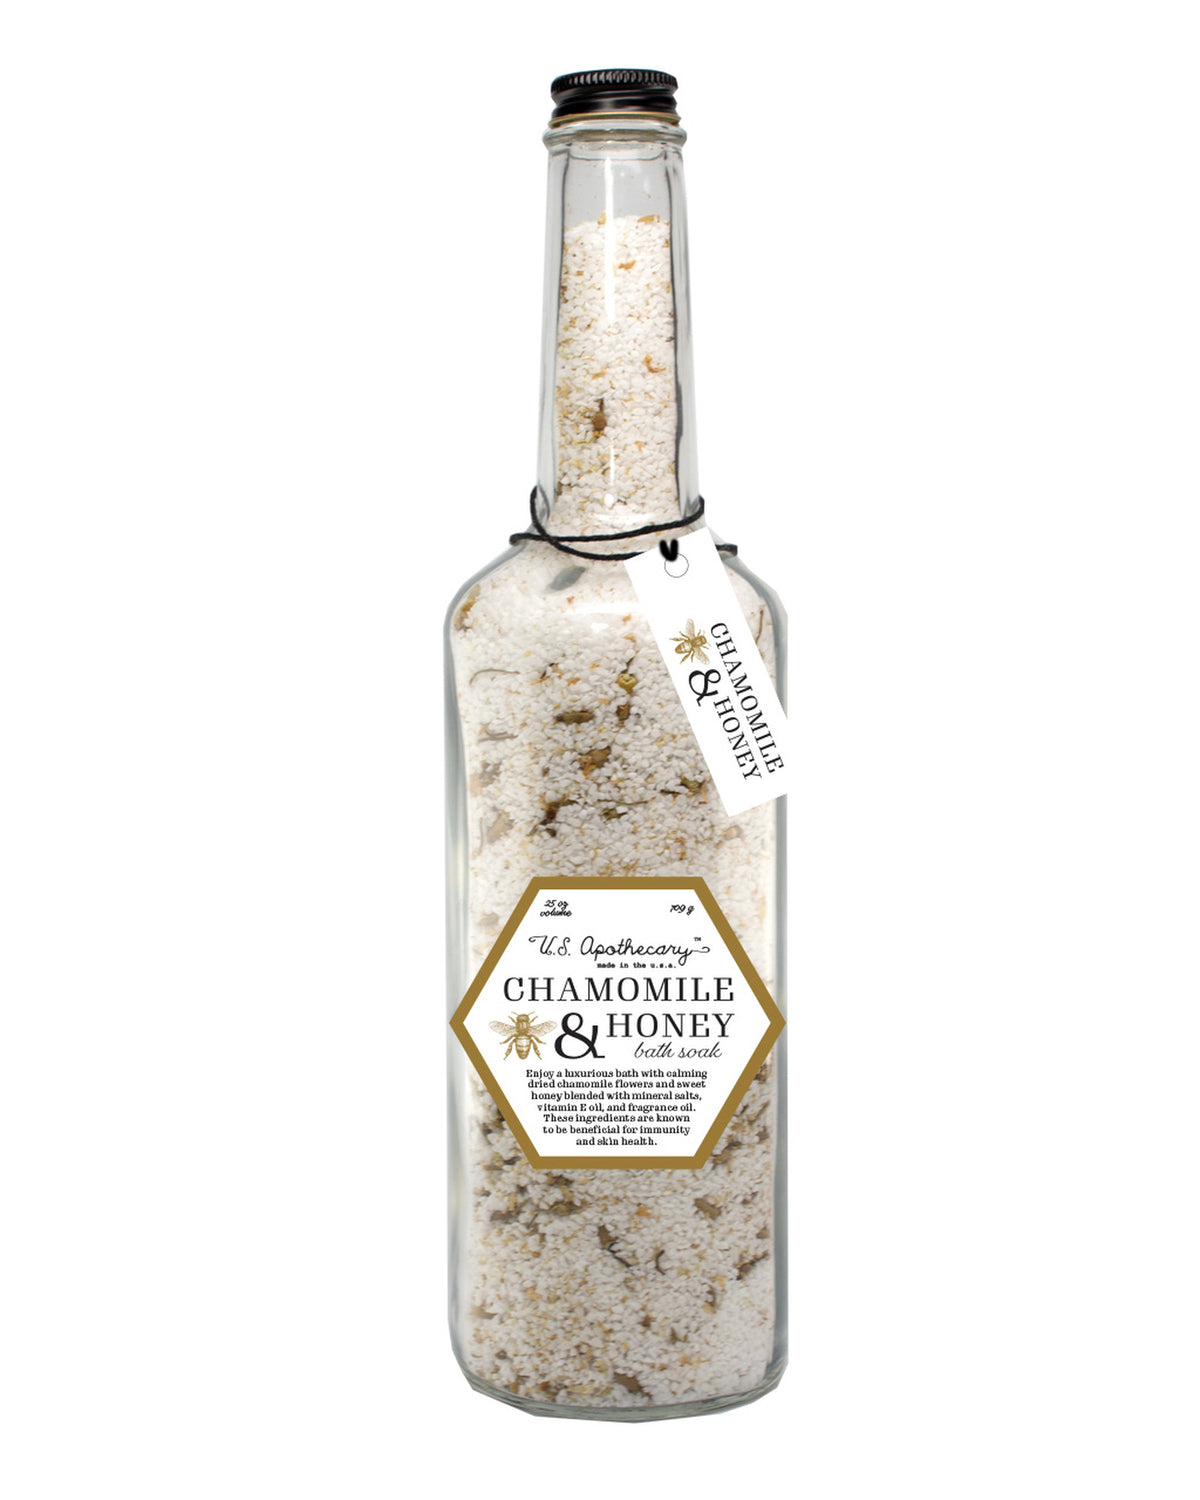 U.S. Apothecary Chamomile & Honey Bath Soak Salt